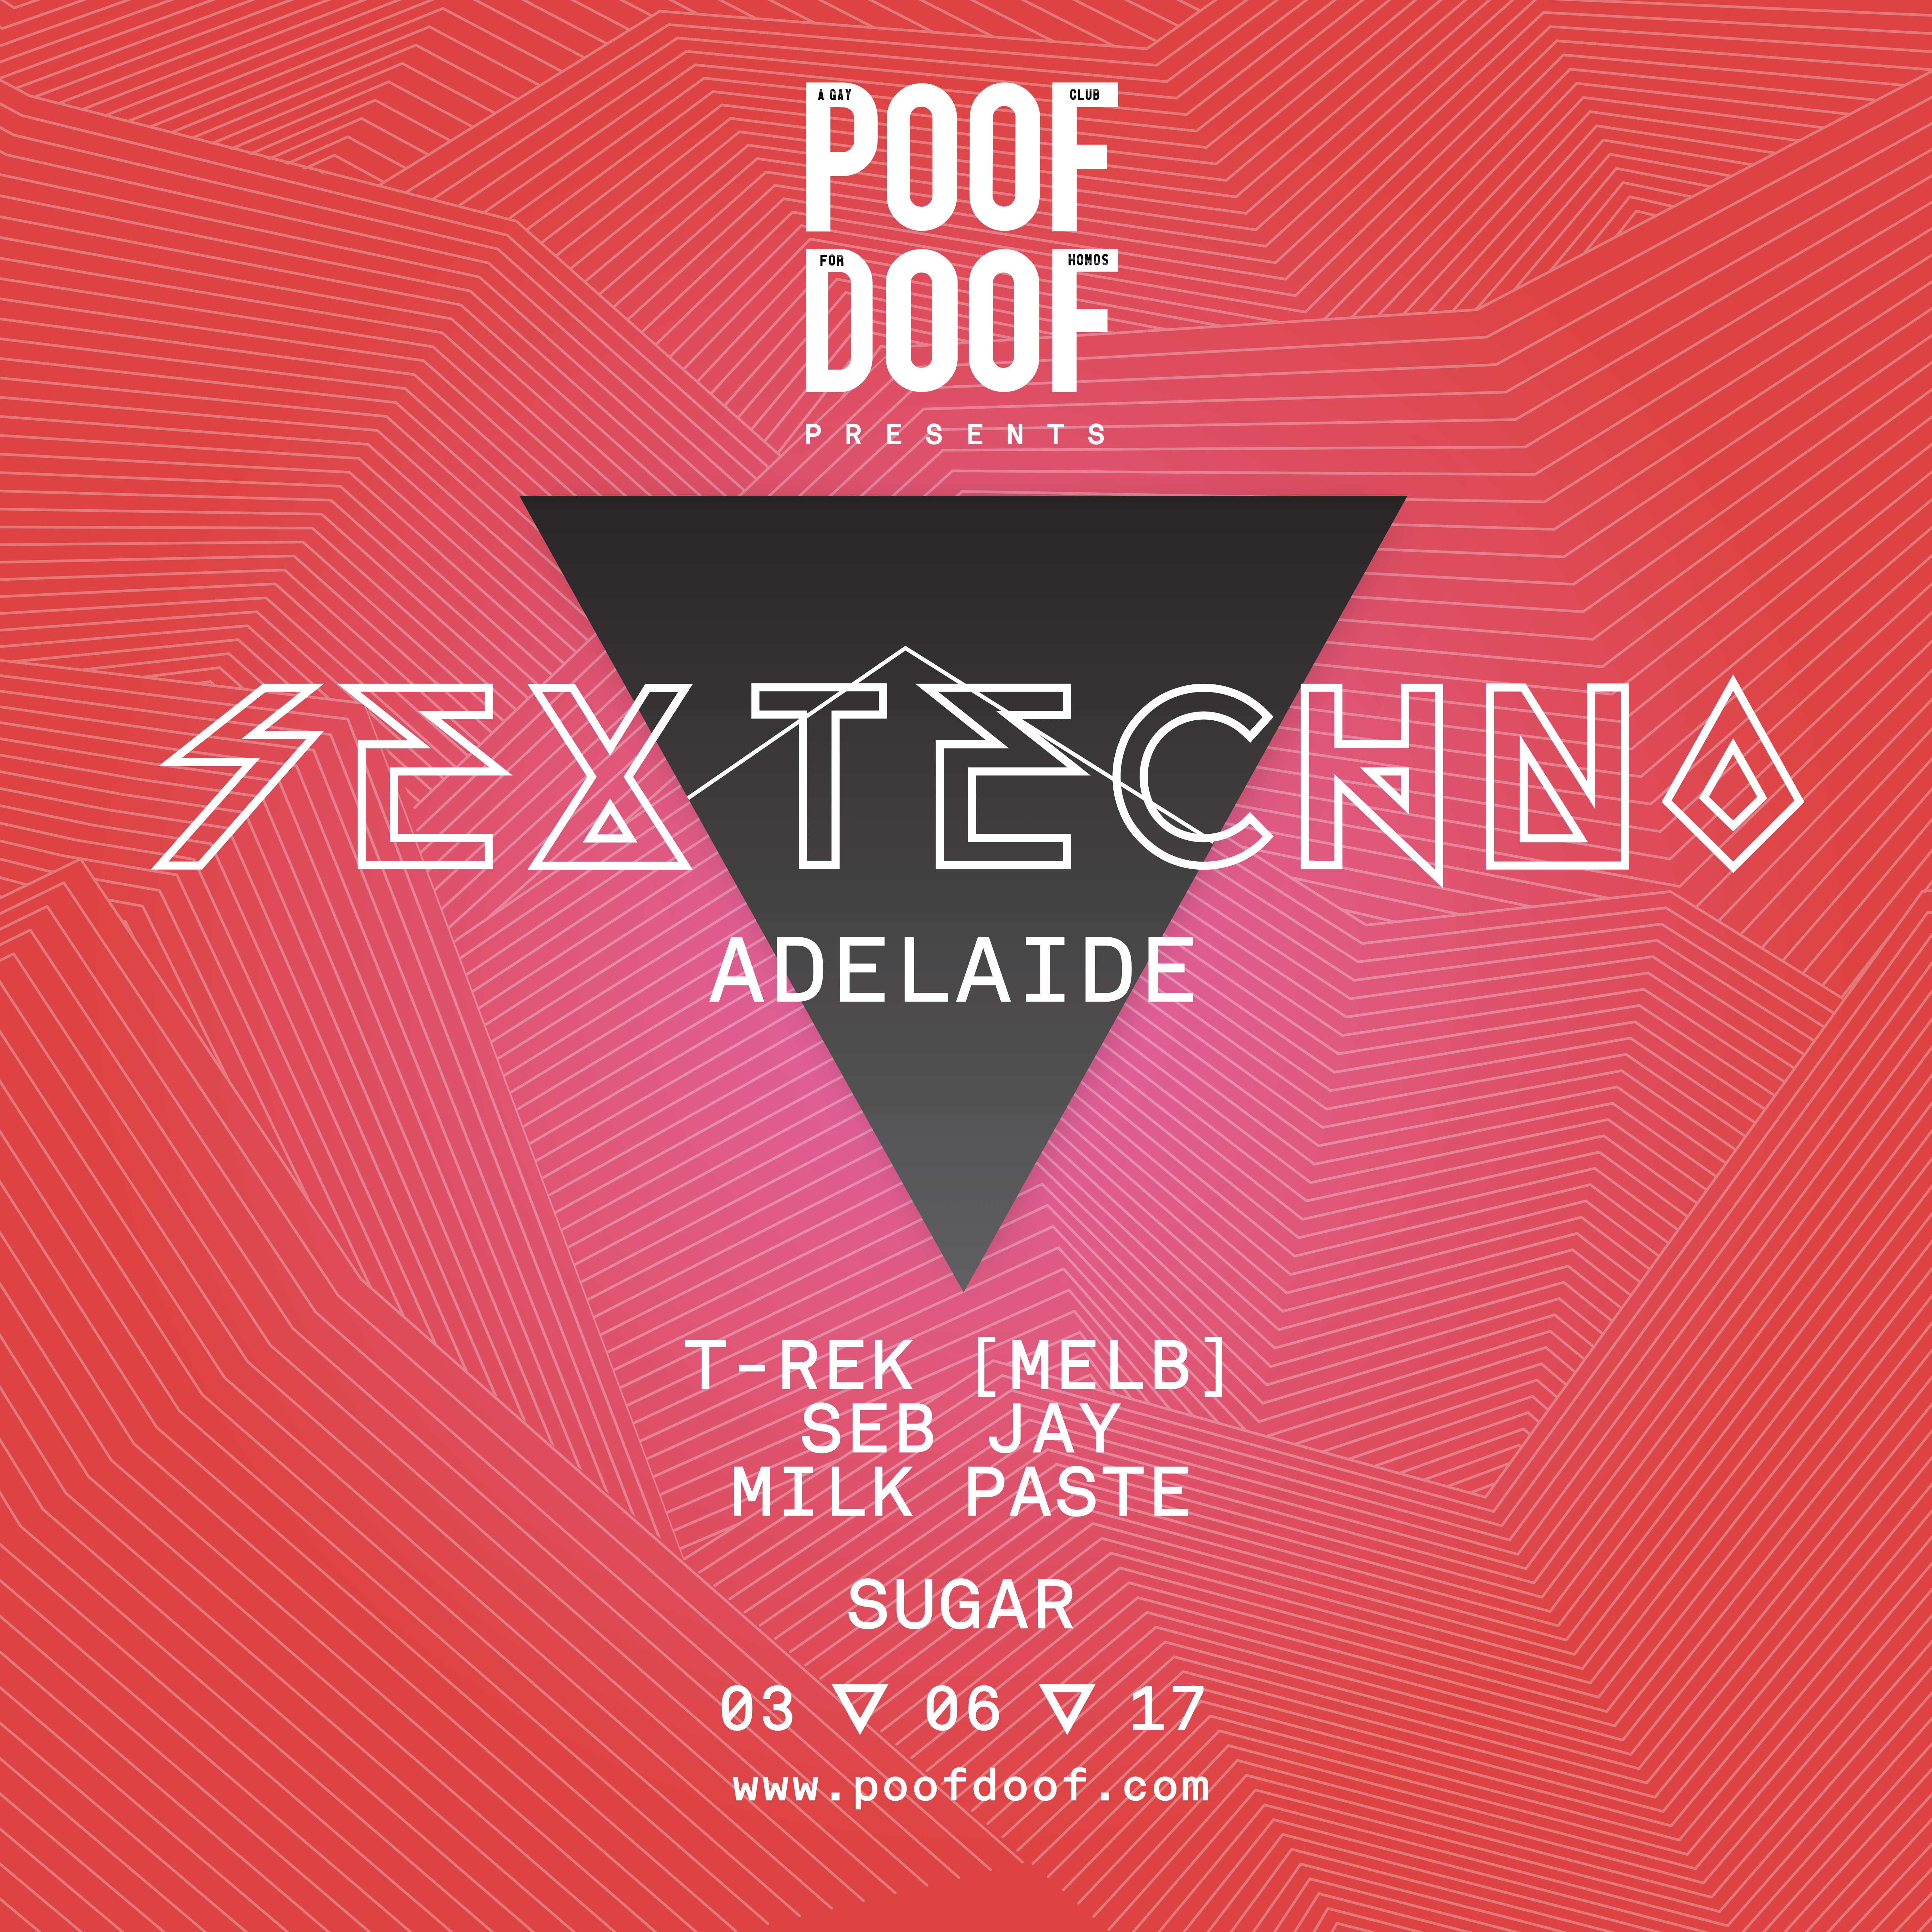 POOF DOOF Adelaide Sex Techno pic